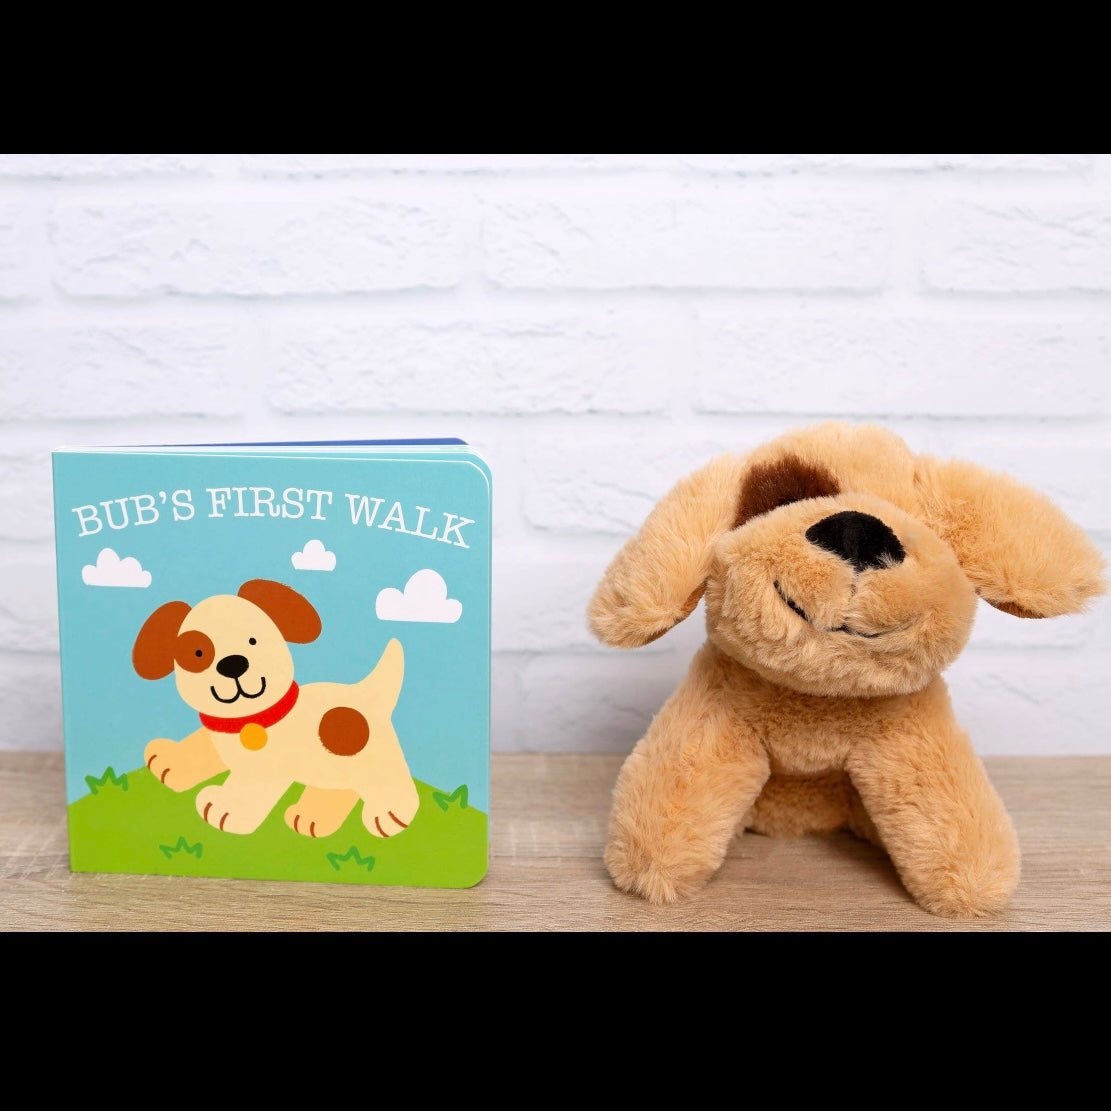 Bub's First Walk Book and Stuffed Animal Set